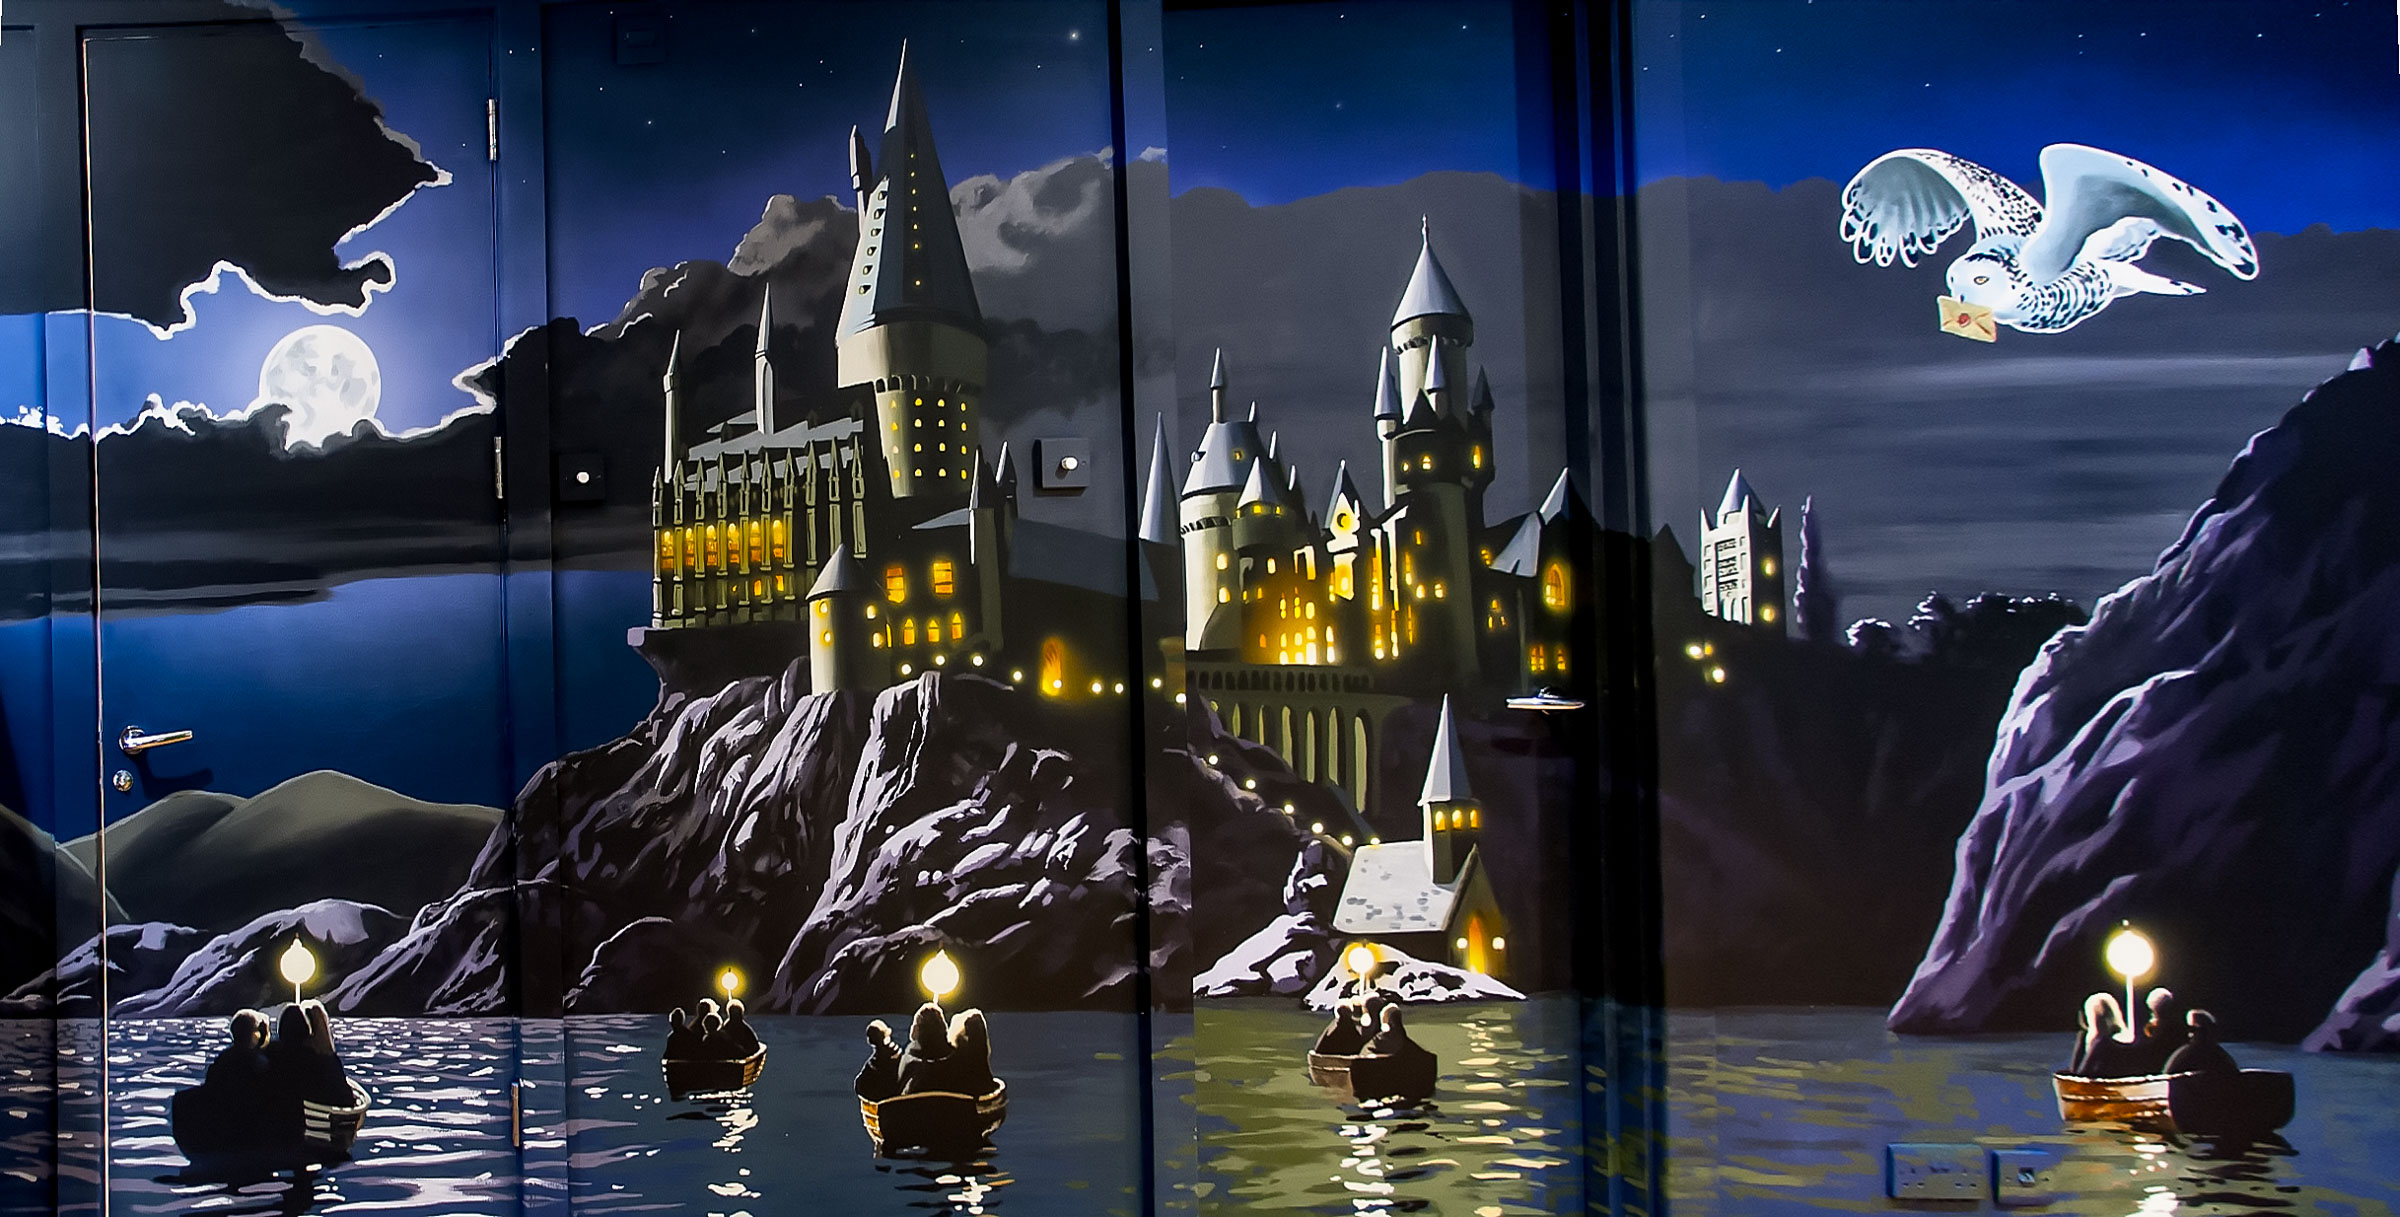 Harry Potter Hogwarts mural shown here straight on.